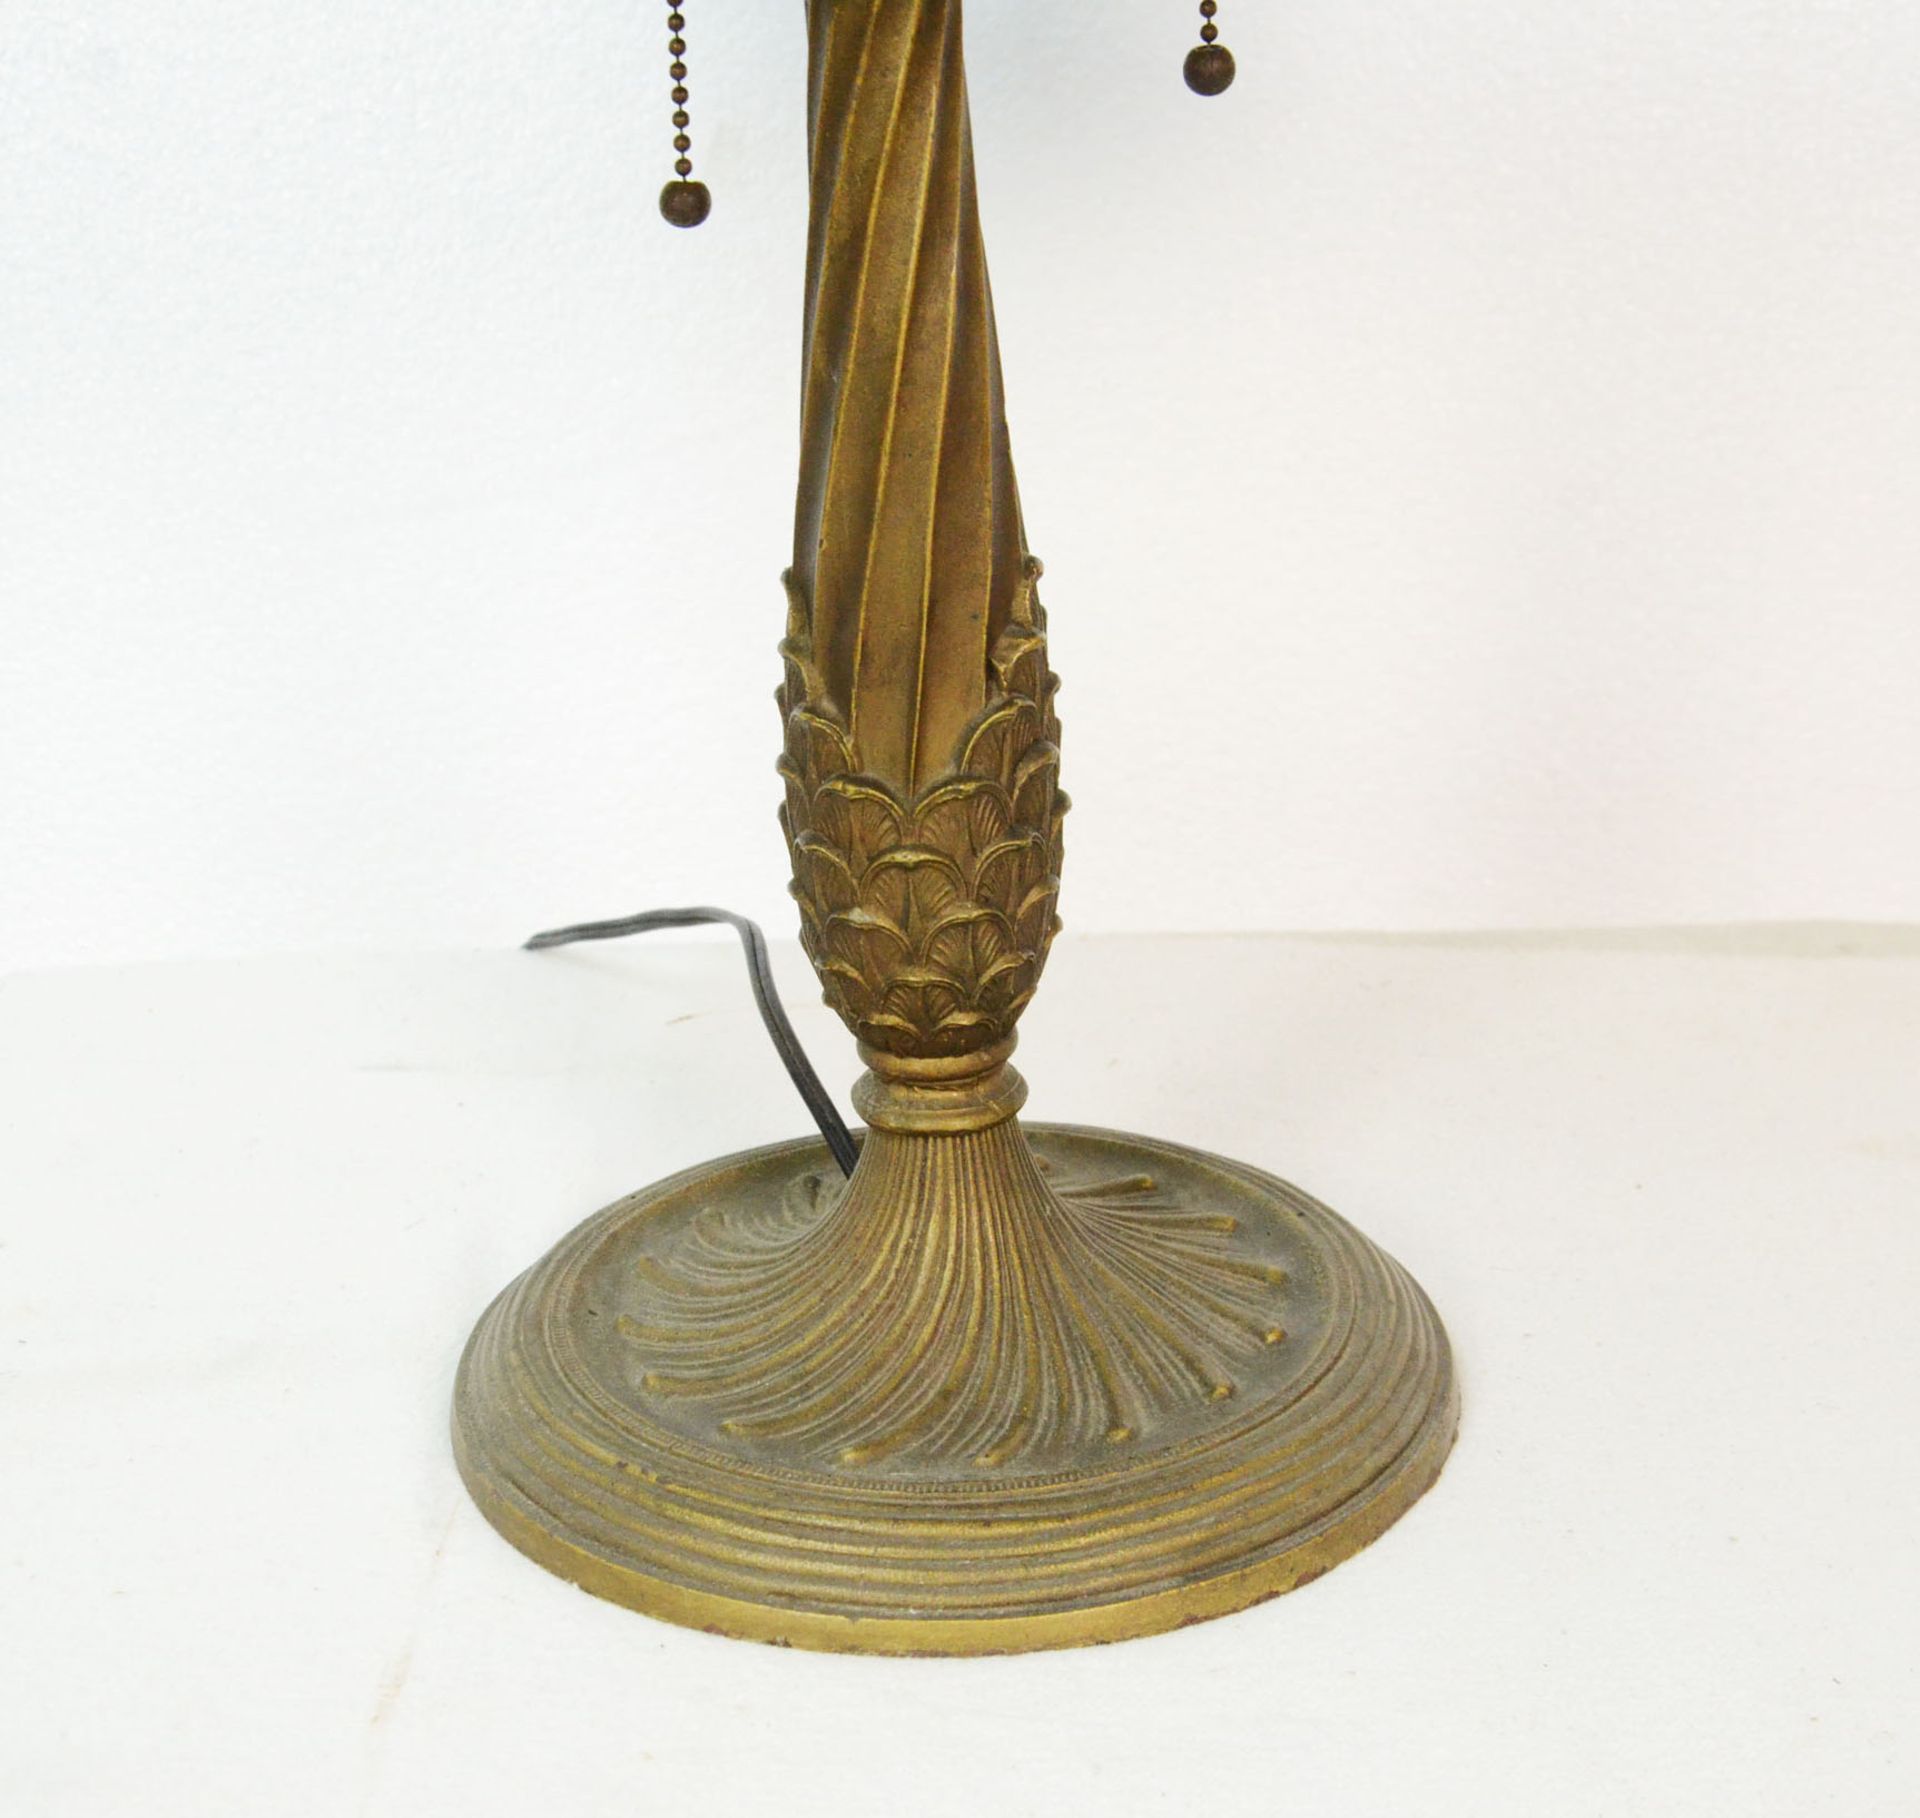 Tiffany style desk lamp - Image 4 of 6